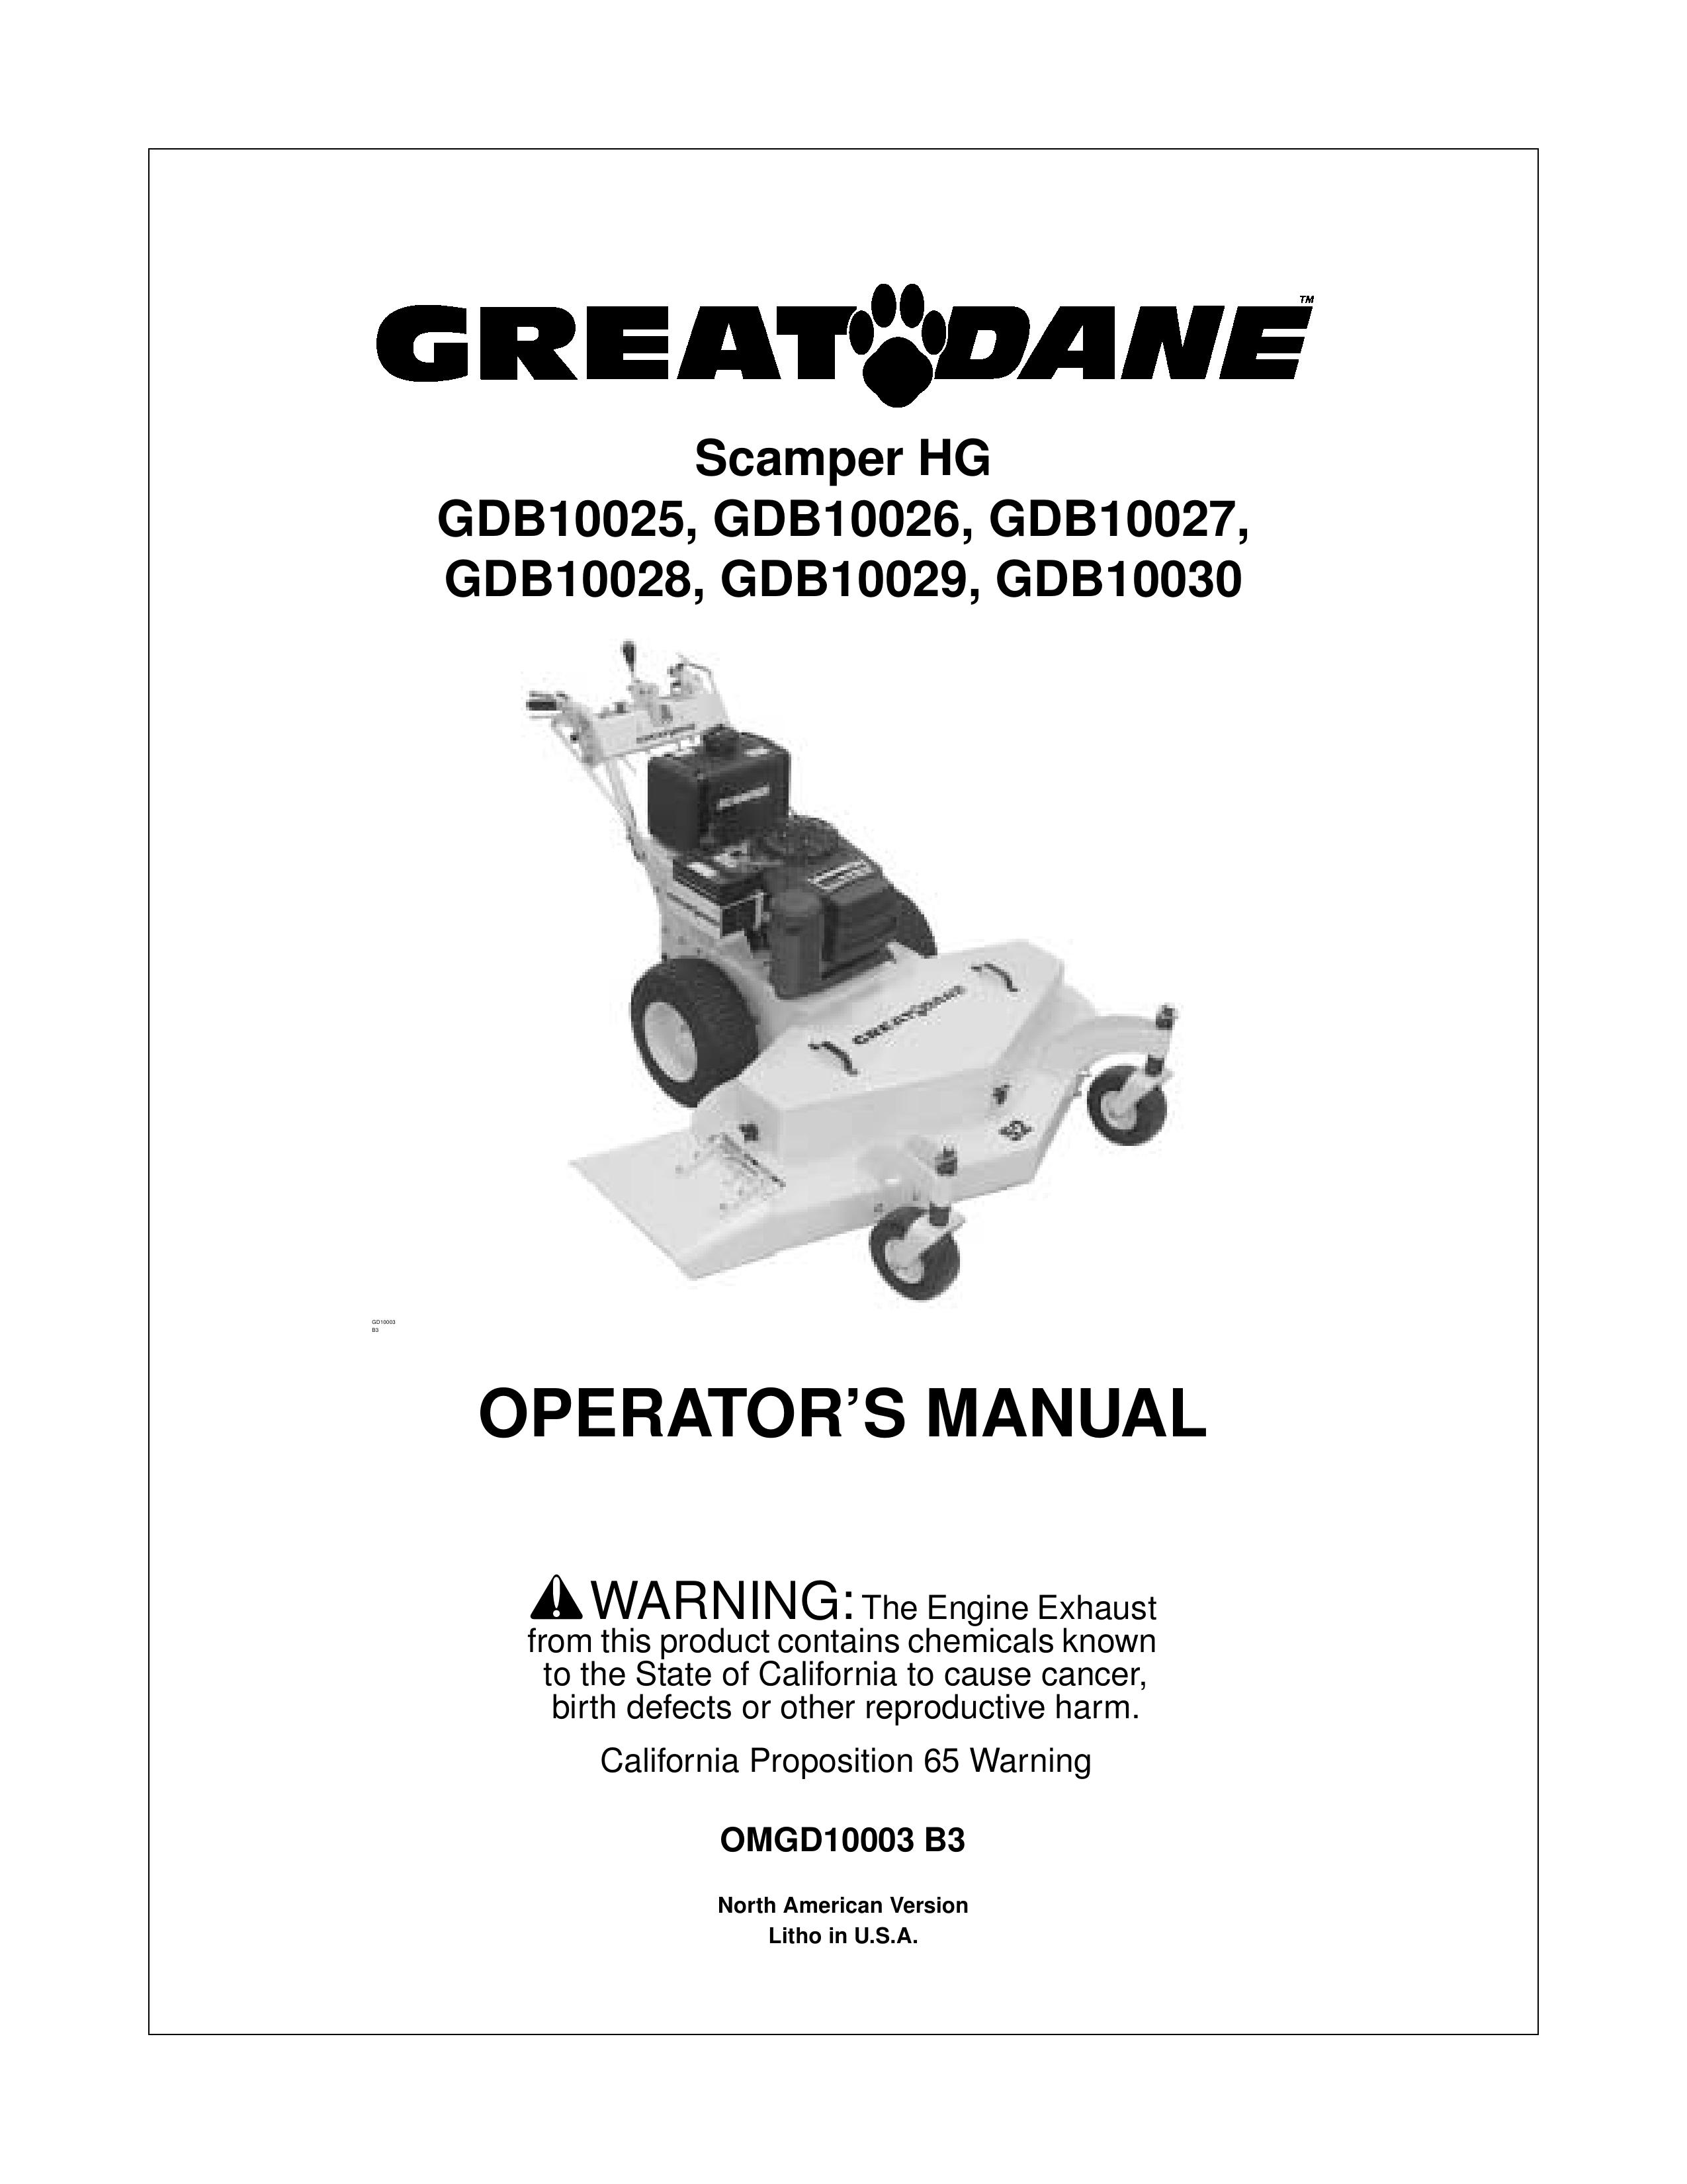 Great Dane GDB10028 Lawn Mower User Manual